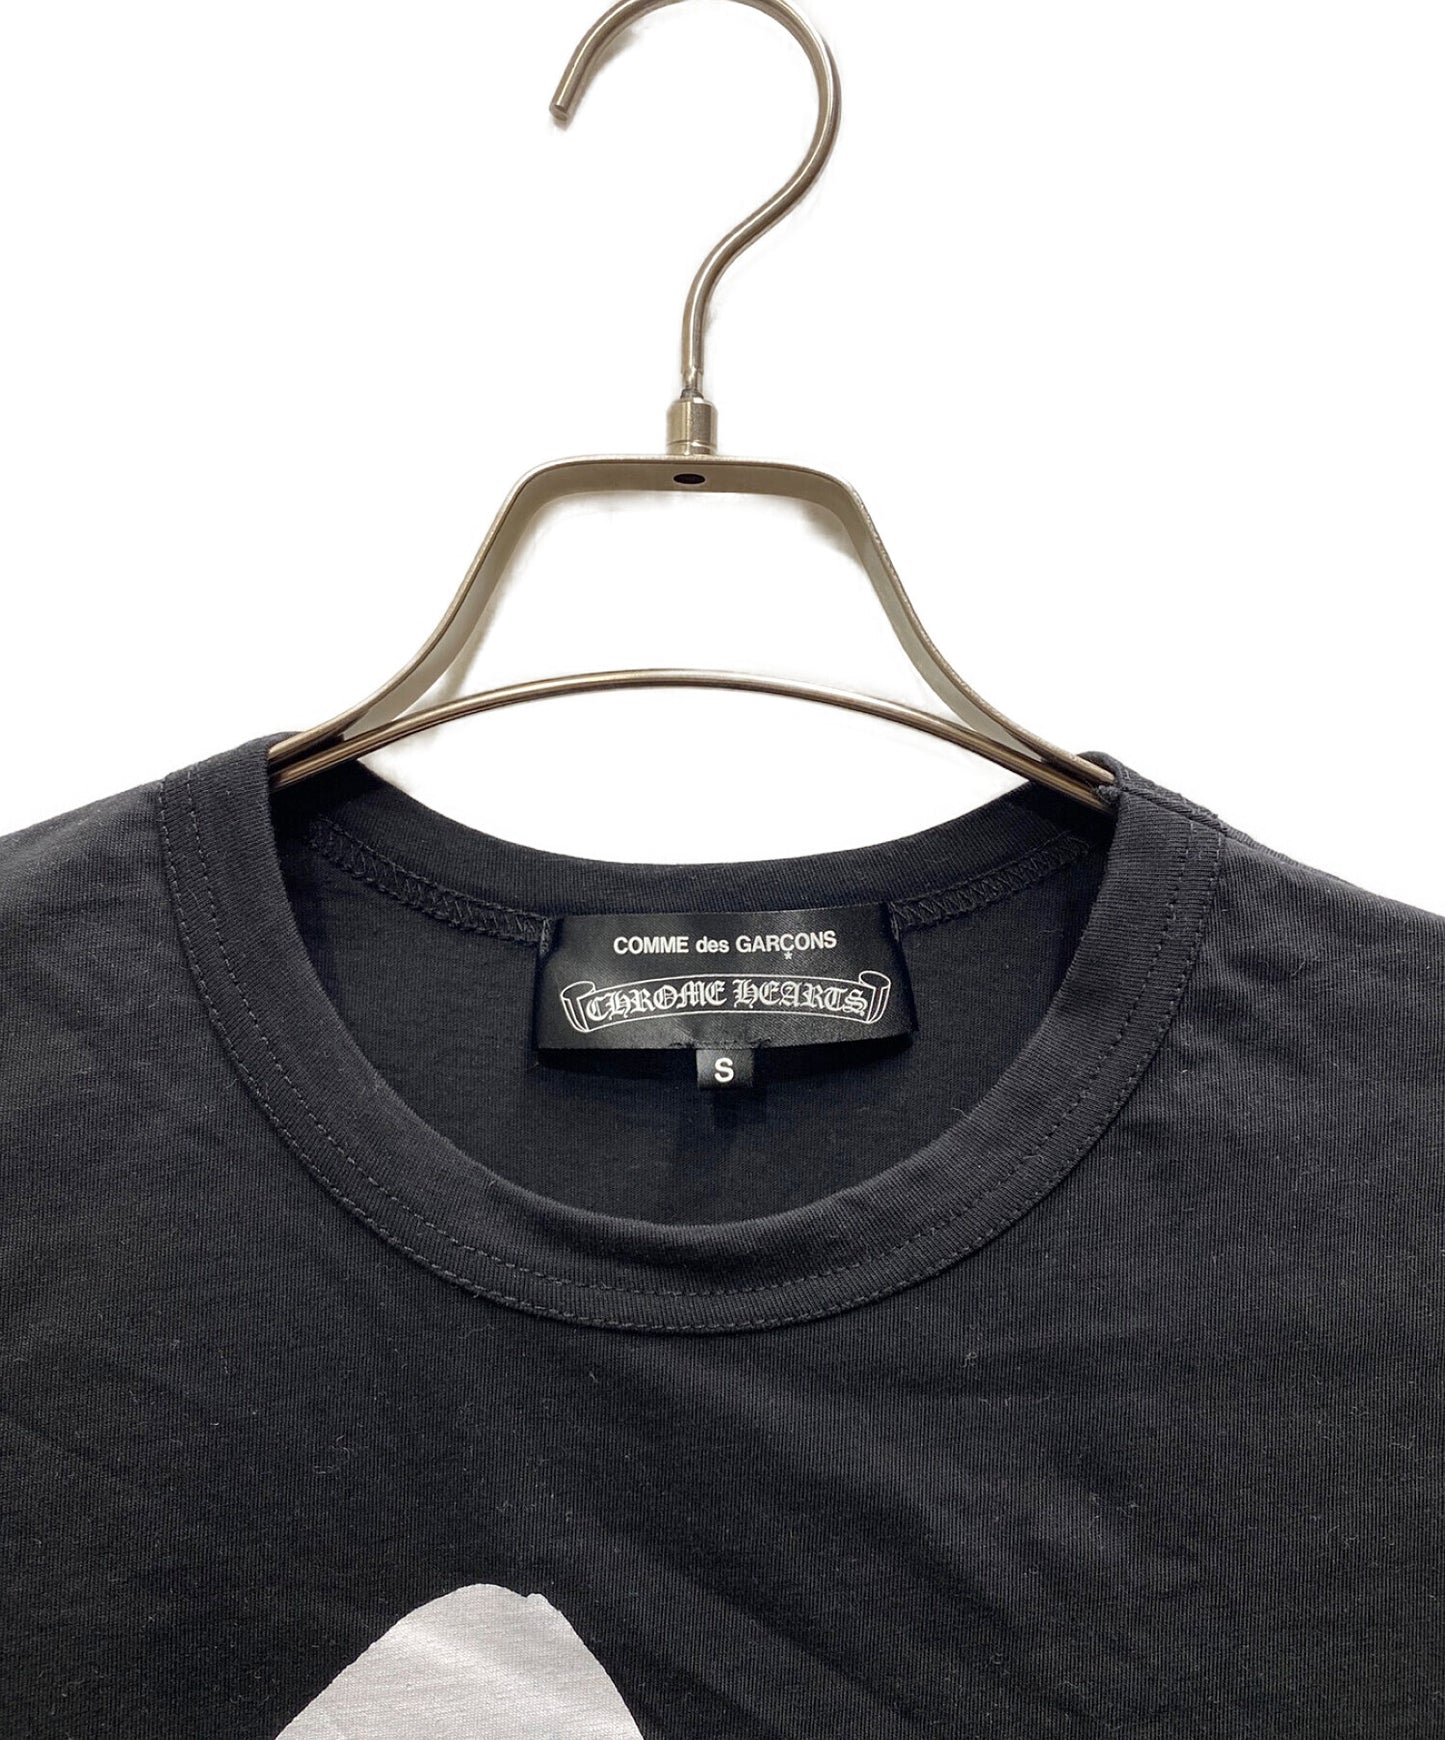 Comme des Garcons Dover Street Market Limited Collaboration 티셔츠 ZI-T002-001